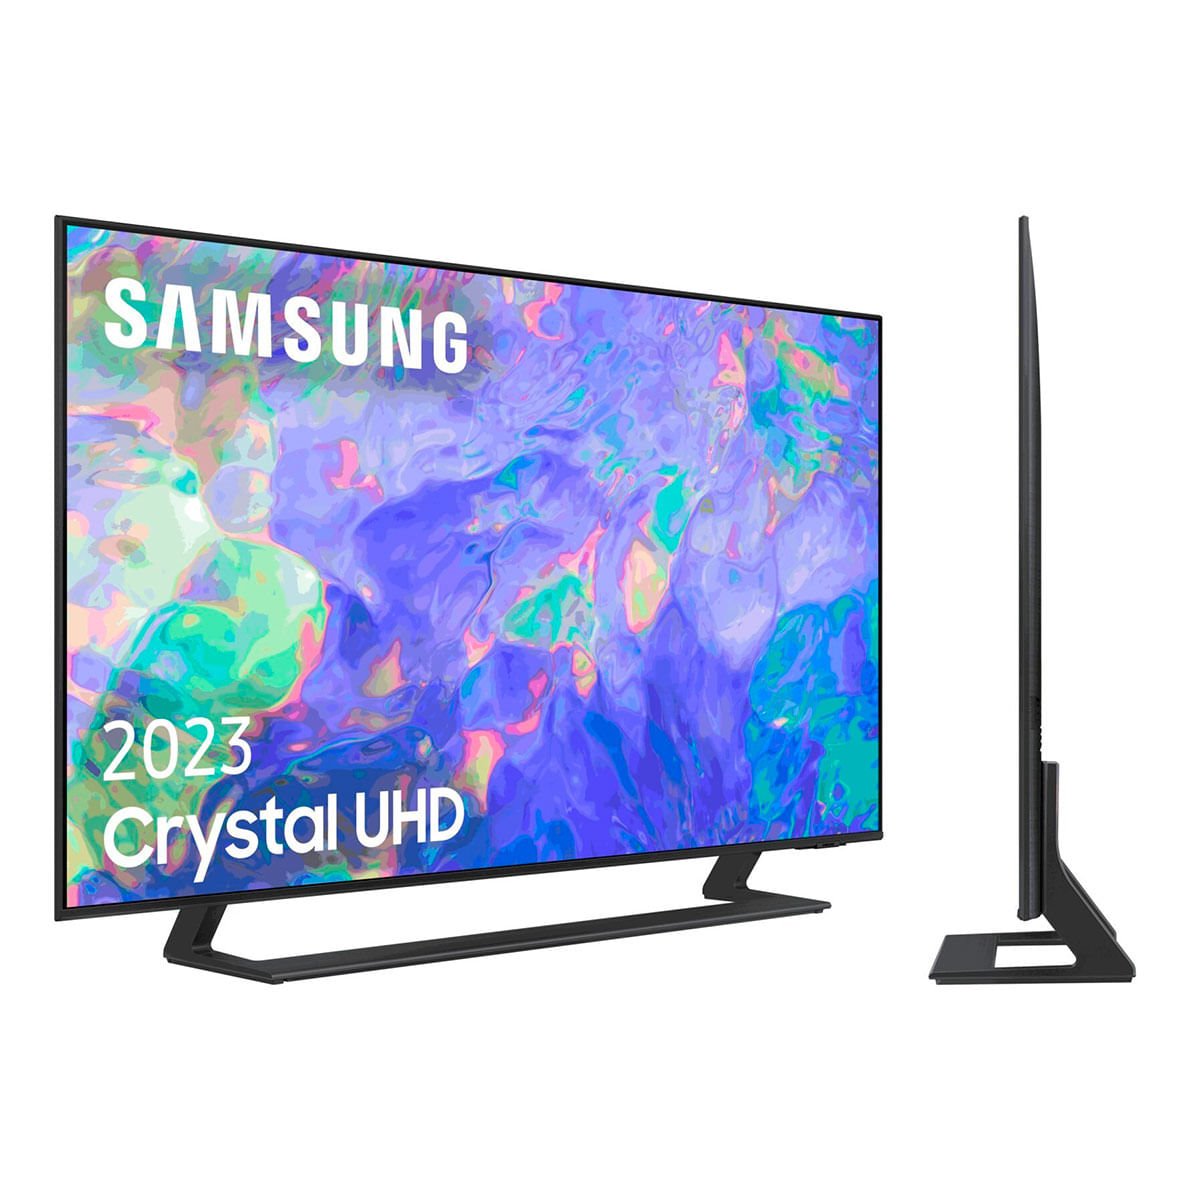 Pantalla Samsung 50 Pulgadas LED Full HD Smart TV a precio de socio